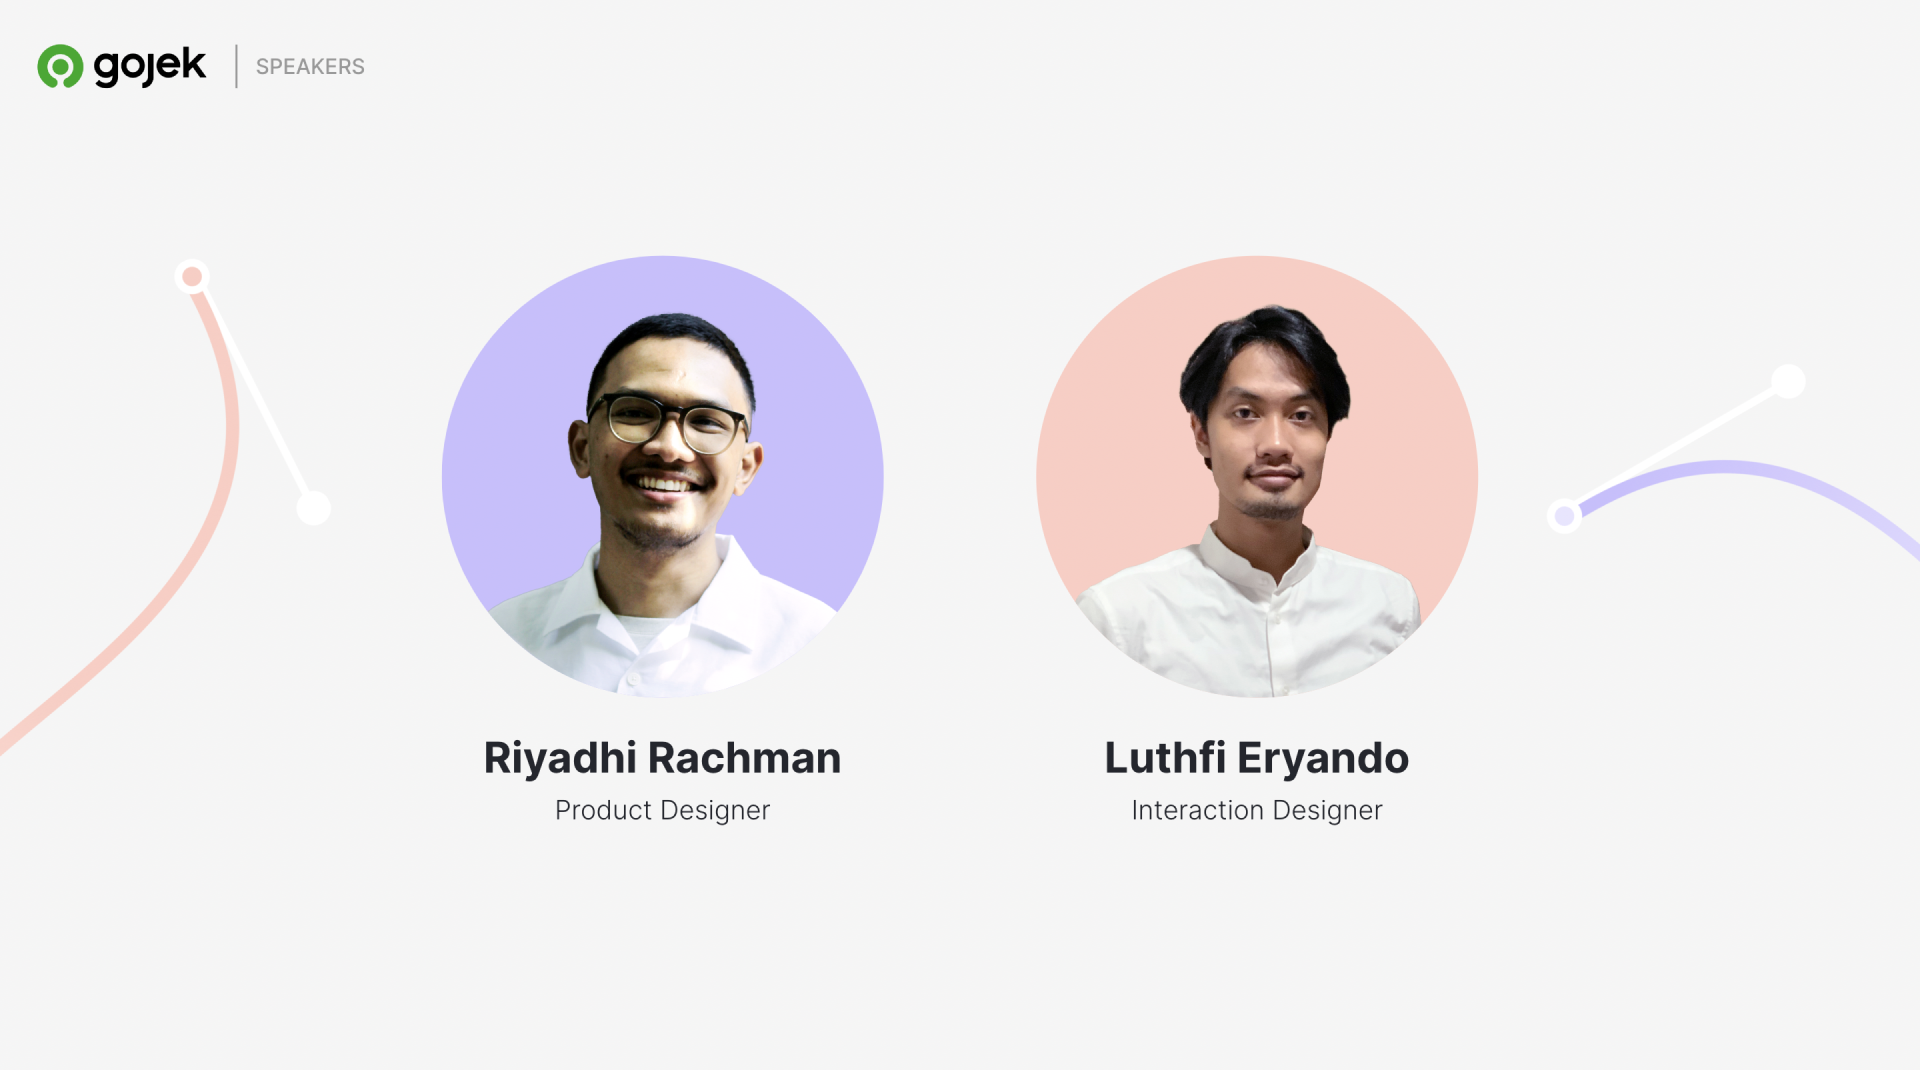 ProtoPie webinar guest speakers Riyadhi Rachman and Luthfi Eryando.